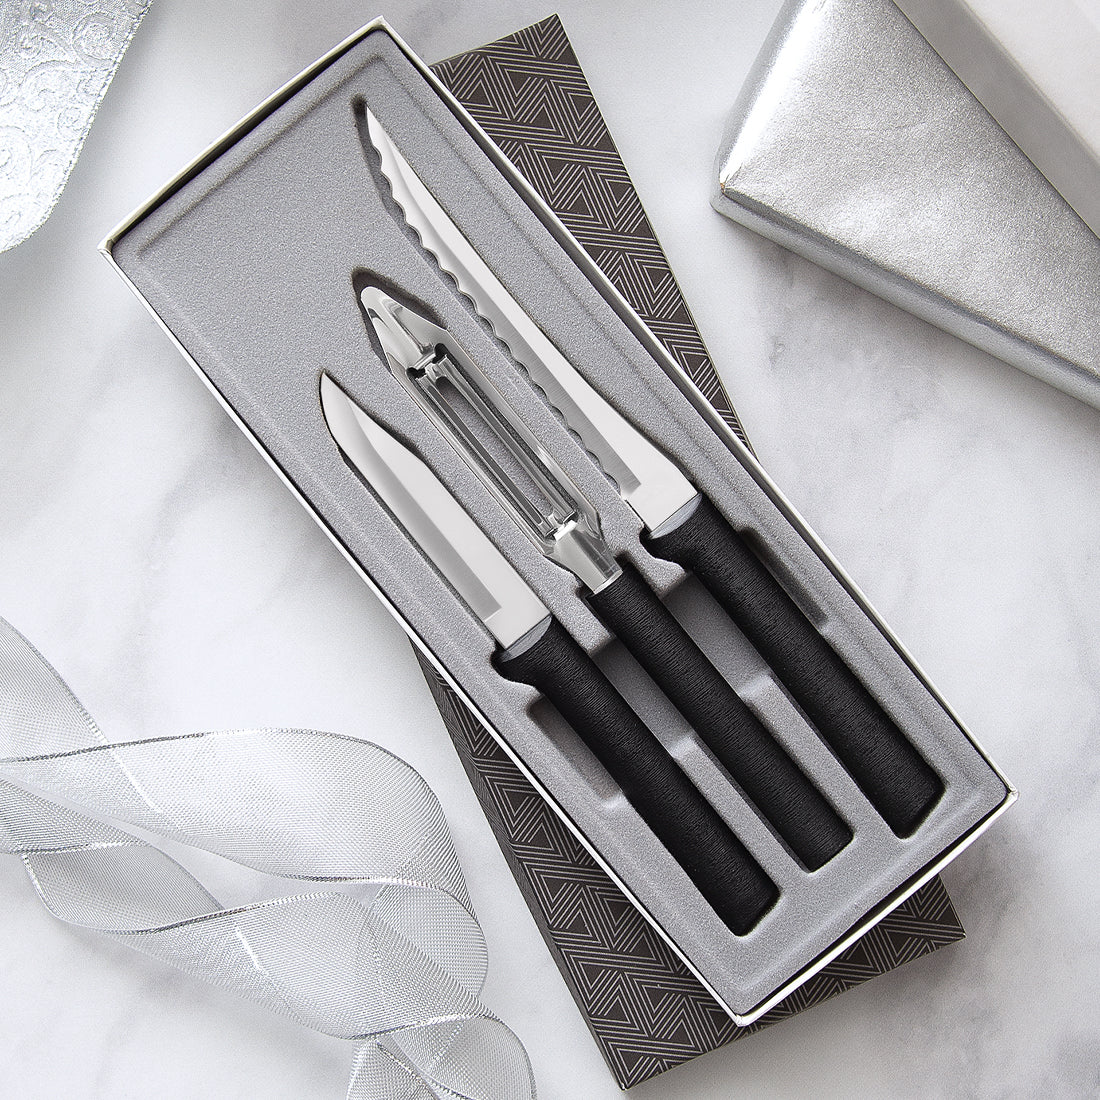 Rada Cutlery S01 Paring Knives Galore Gift Set